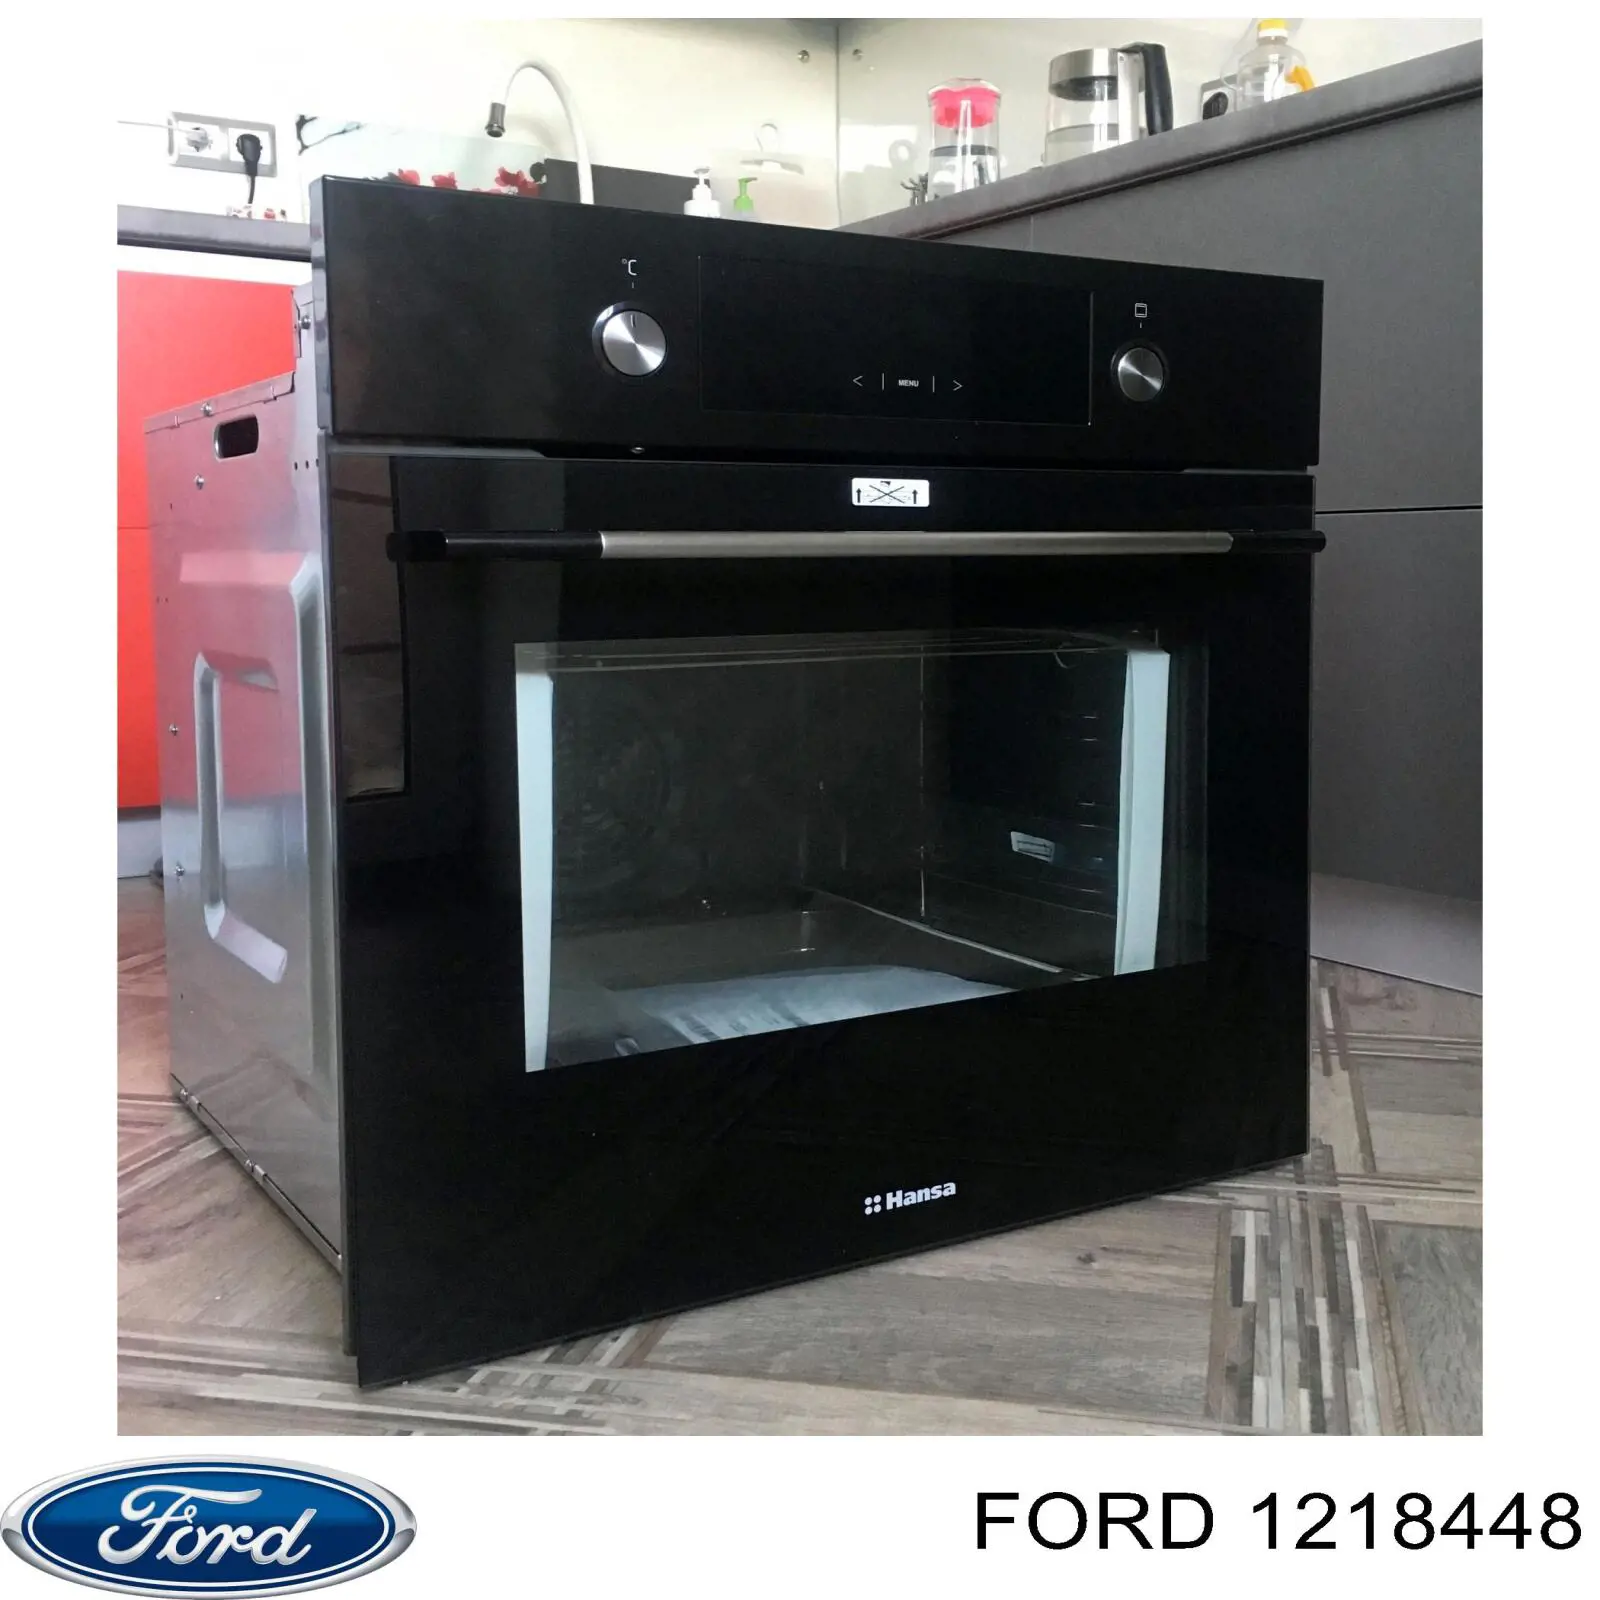 1205017 Ford поршень в комплекте на 1 цилиндр, 2-й ремонт (+0,50)